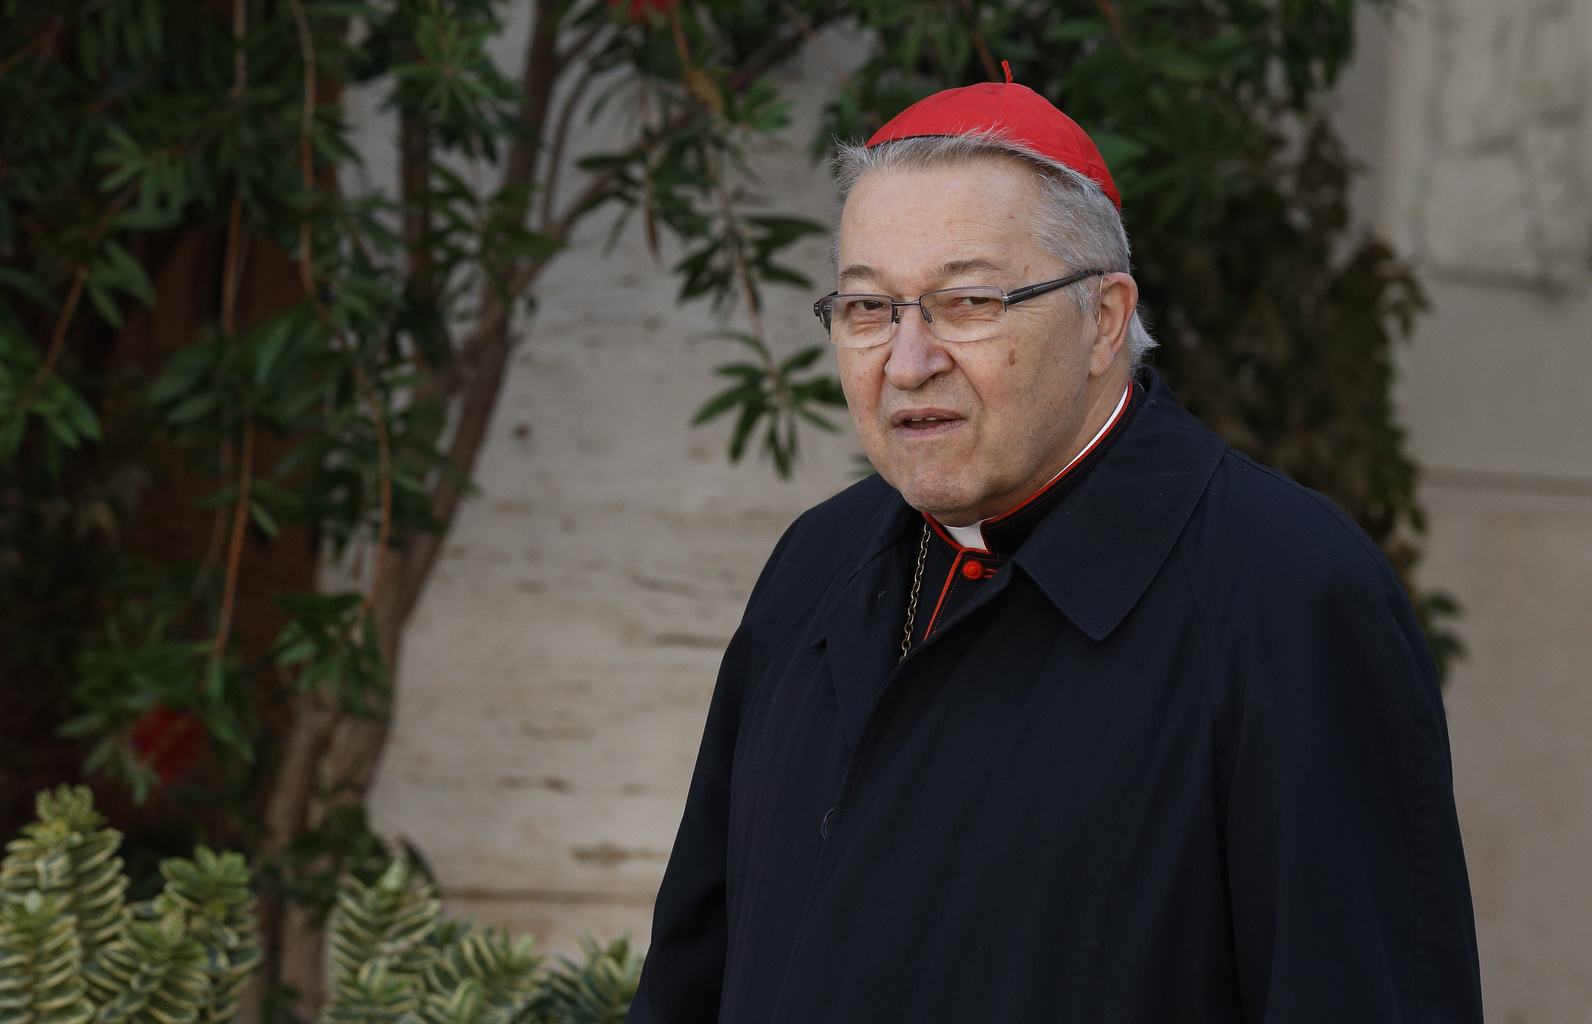 Speculation about Paris archbishop after Vingt-Trois marks 75th birthday